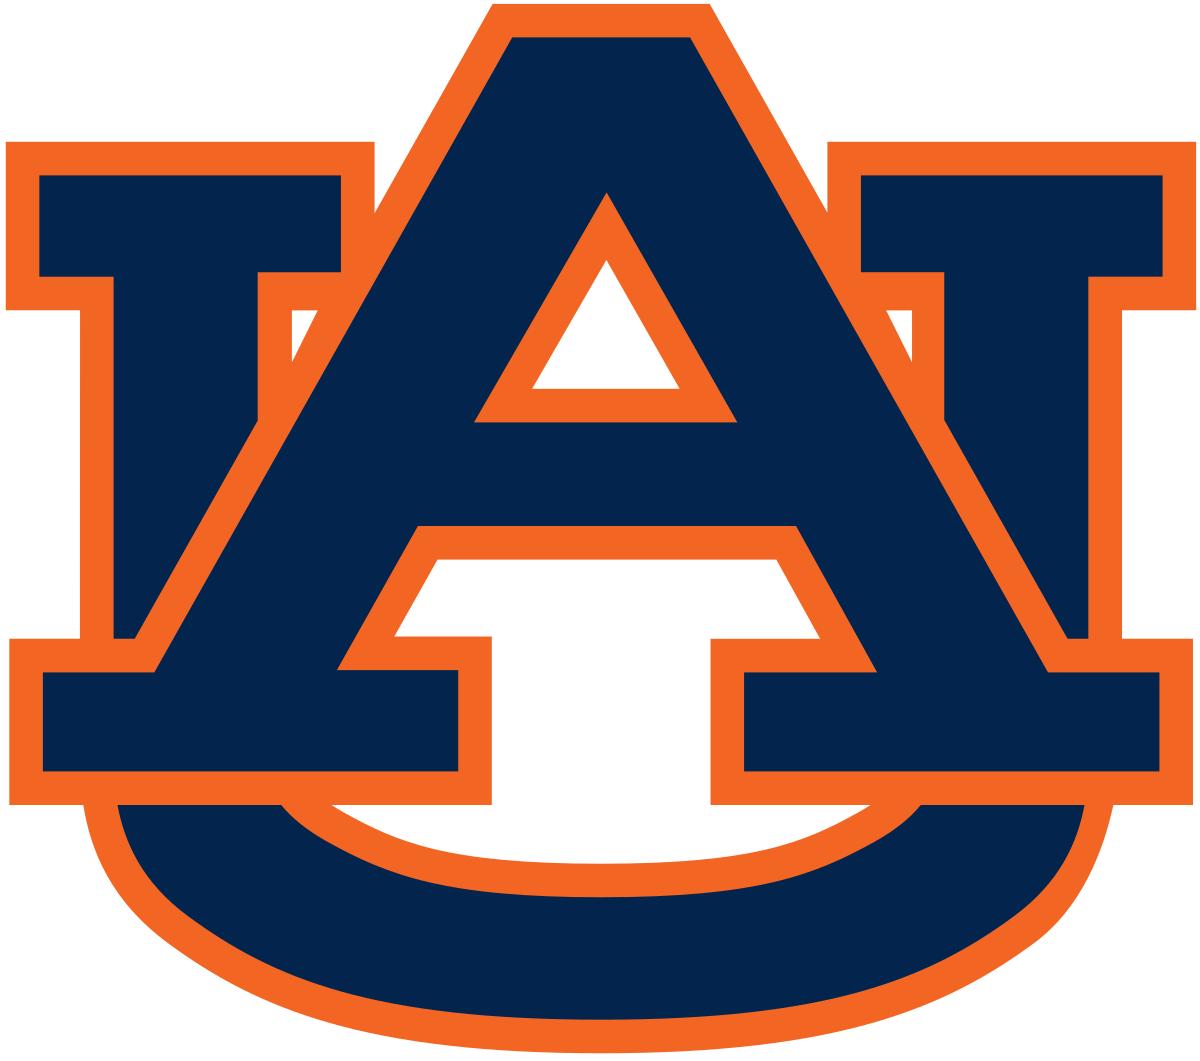 Auburn tigers logo